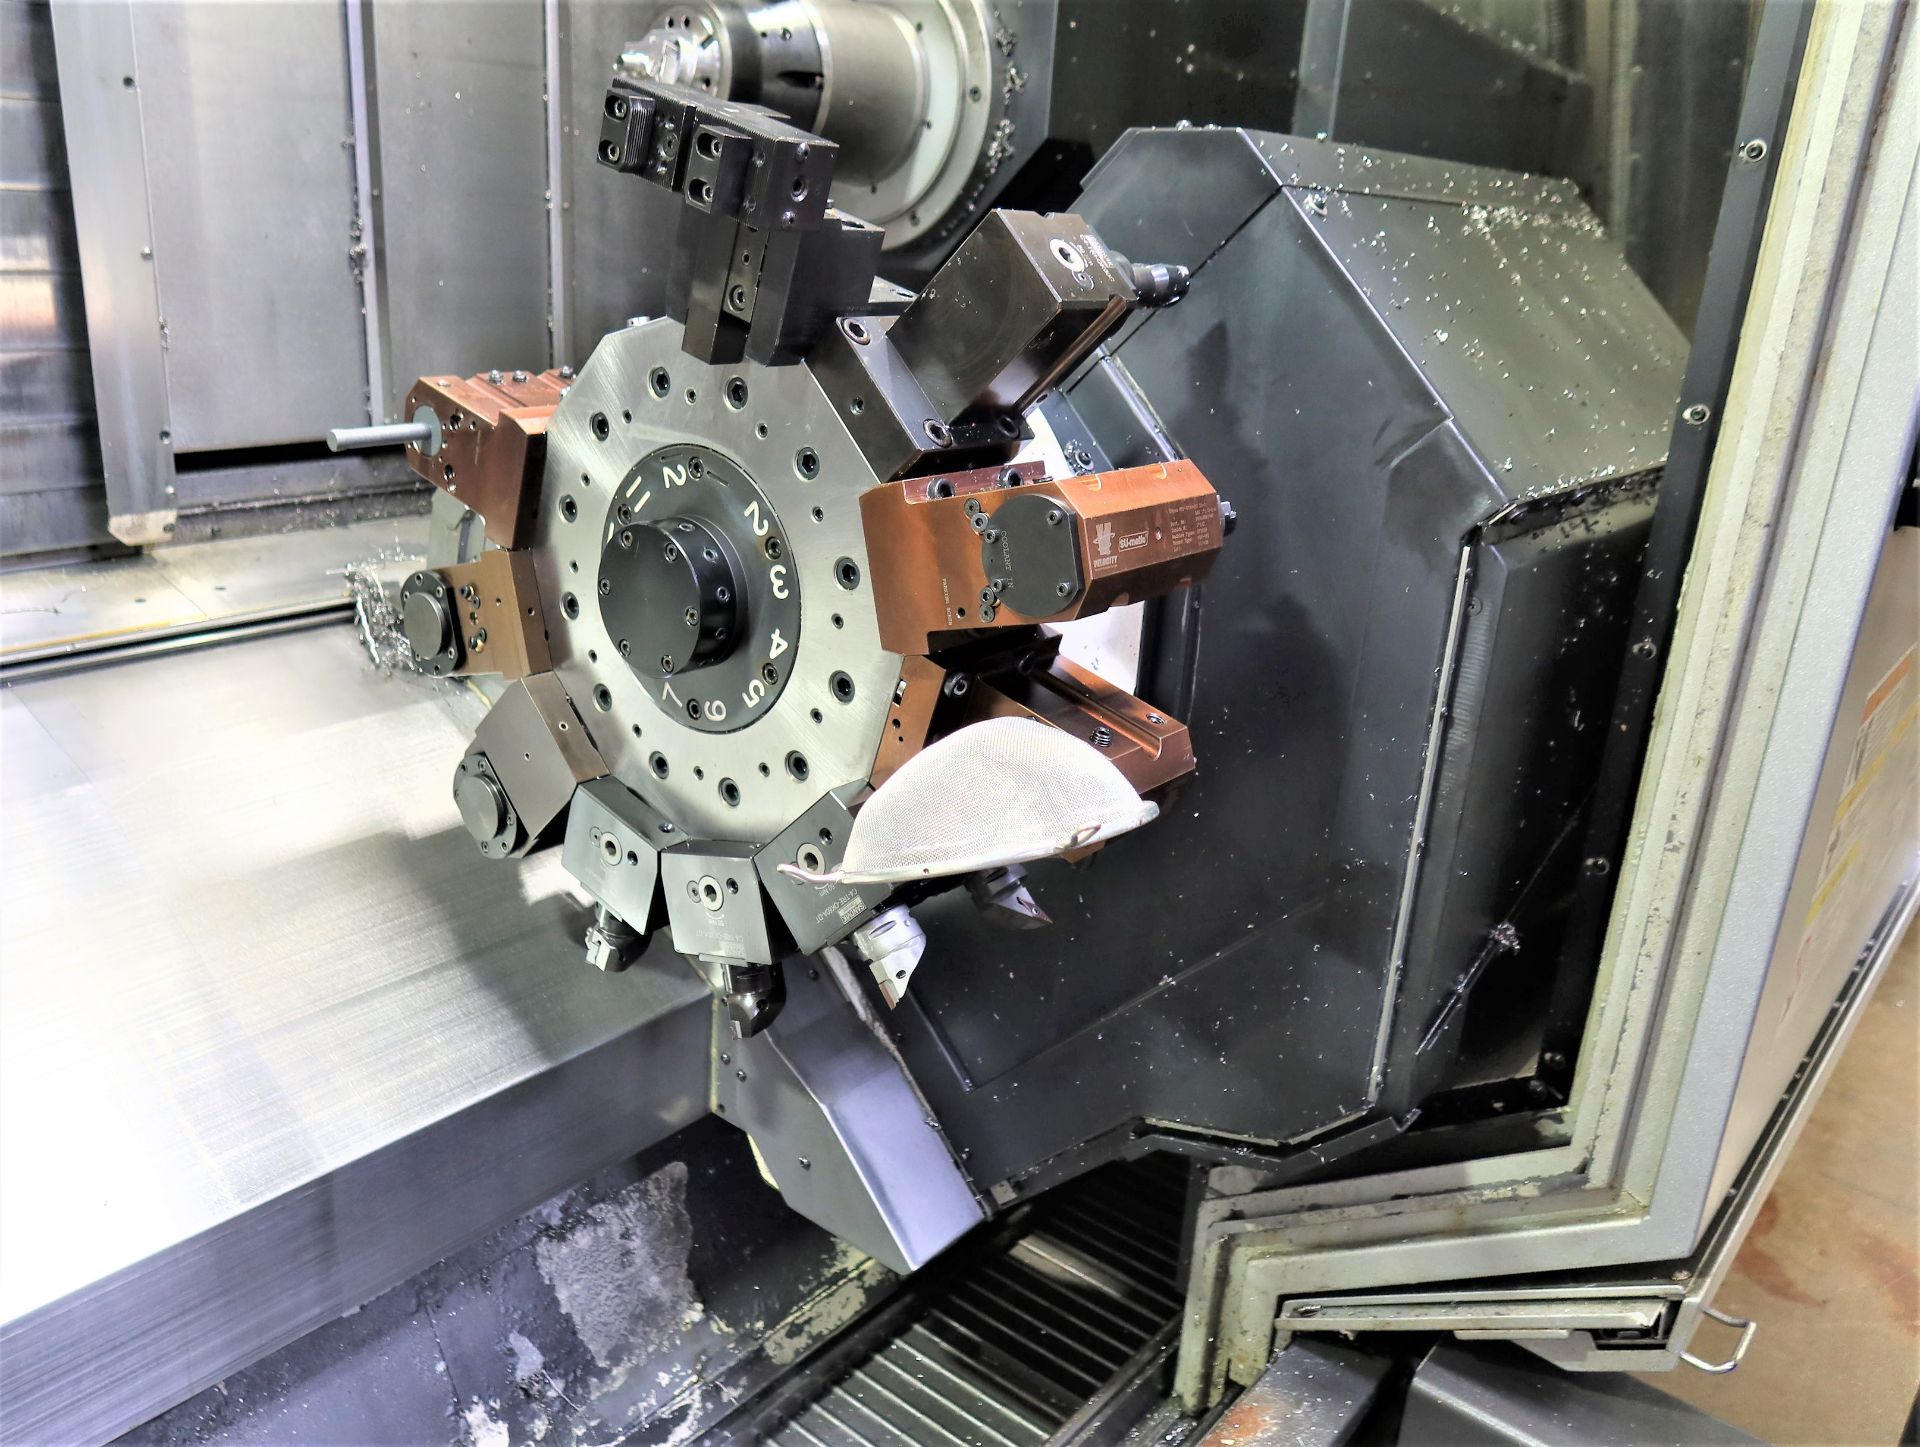 Okuma Multus U3000 5-Axis CNC Mill Lathe, New 2015 - Image 7 of 15